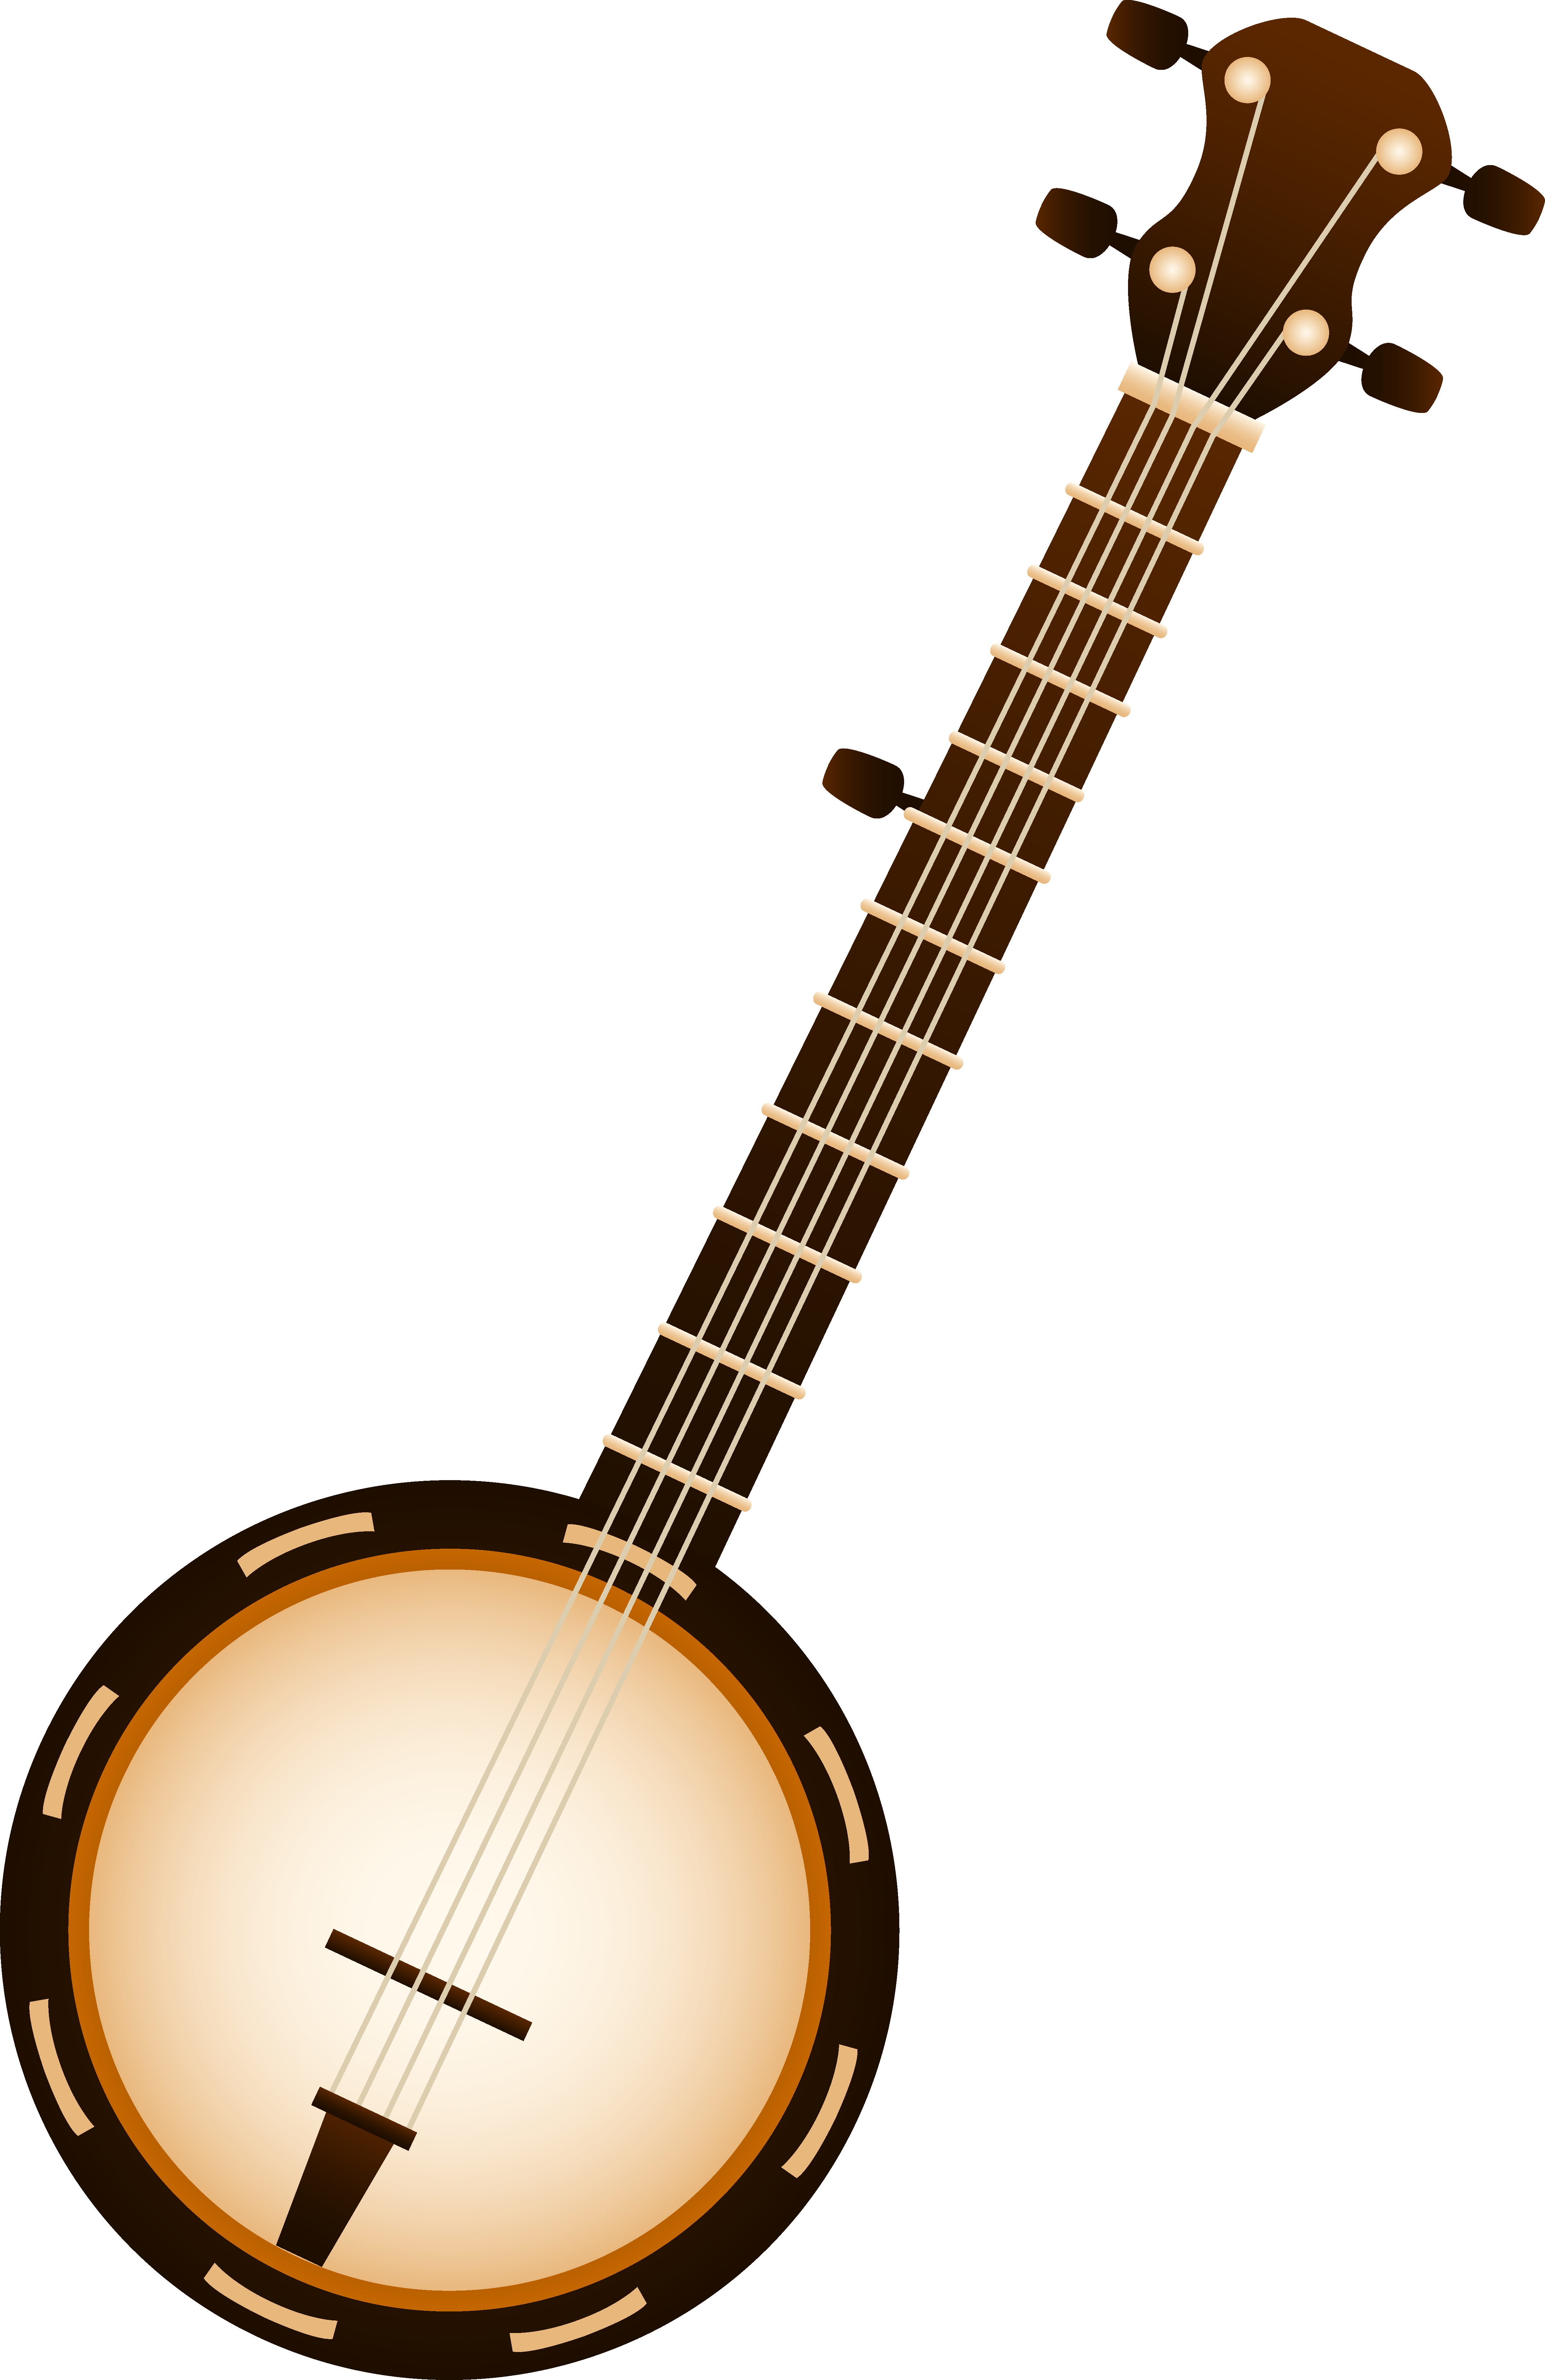 Banjo Musical Instrument - Free Clip Art